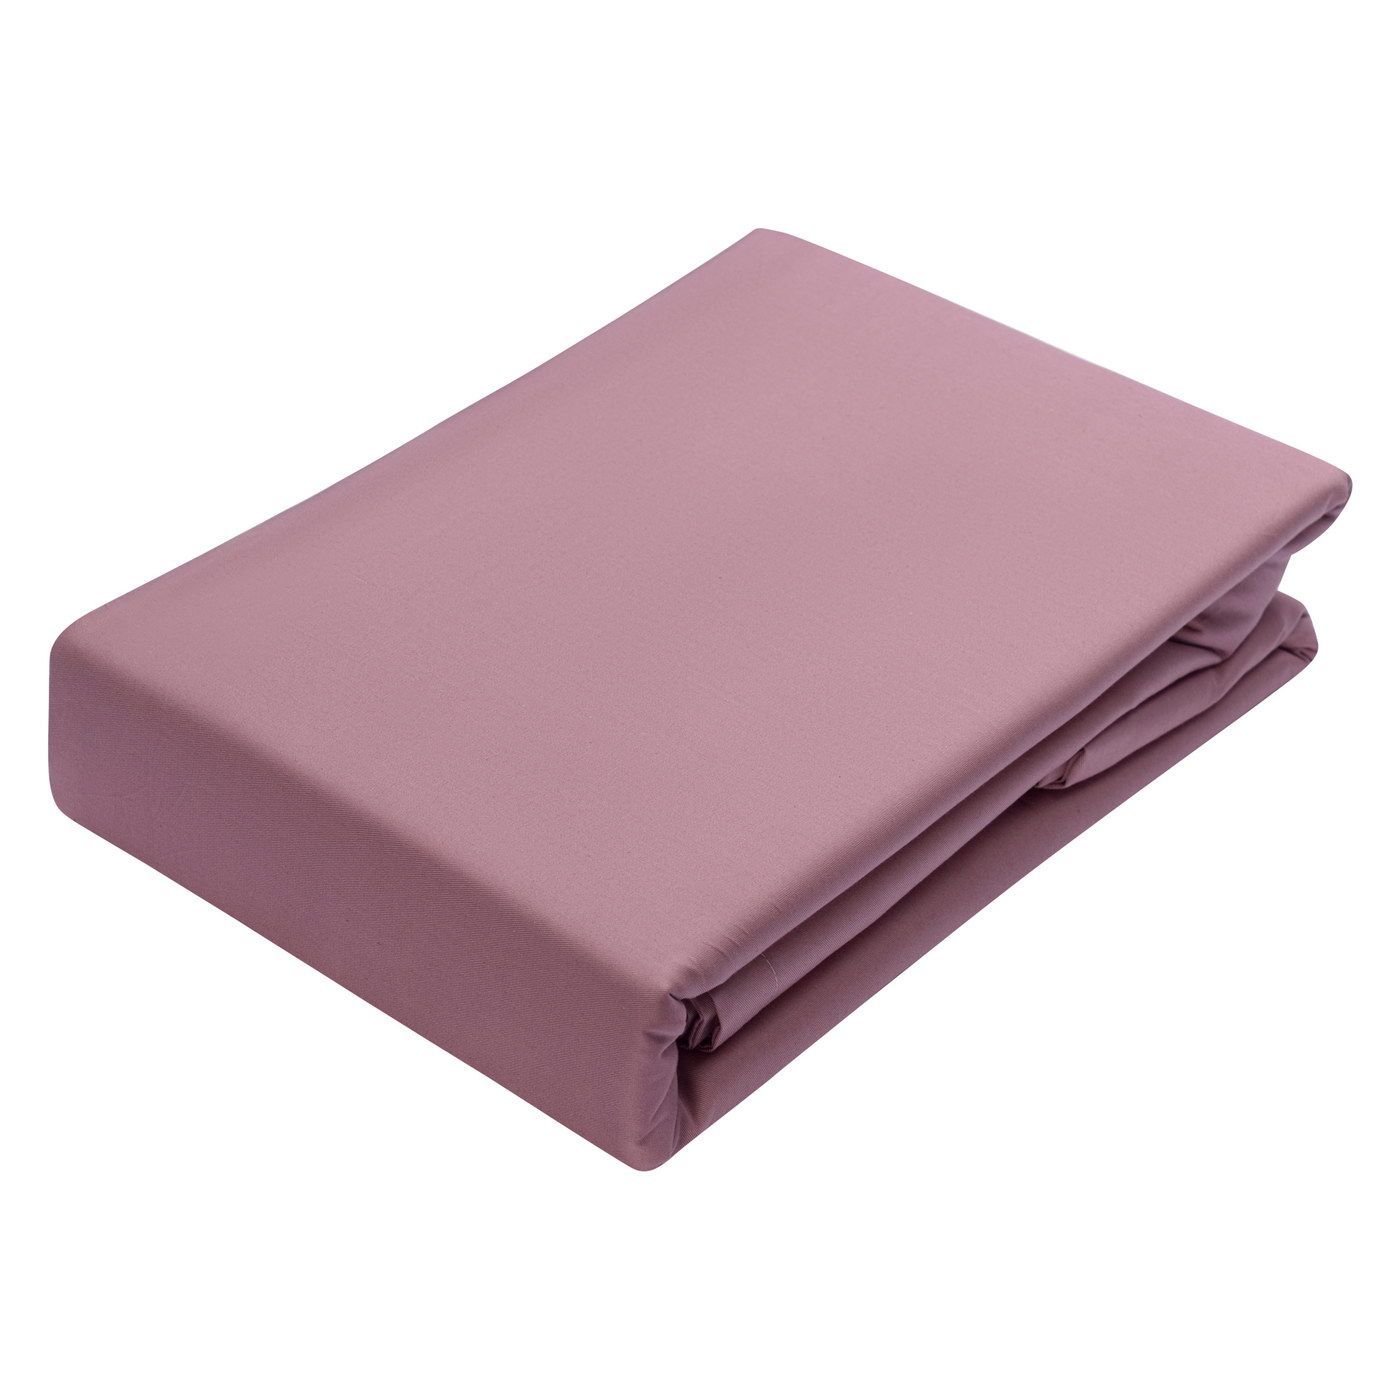 Пододеяльник Мармис цвет: пурпурный (200х220 см), размер 200х220 см sofi972996 Пододеяльник Мармис цвет: пурпурный (200х220 см) - фото 1